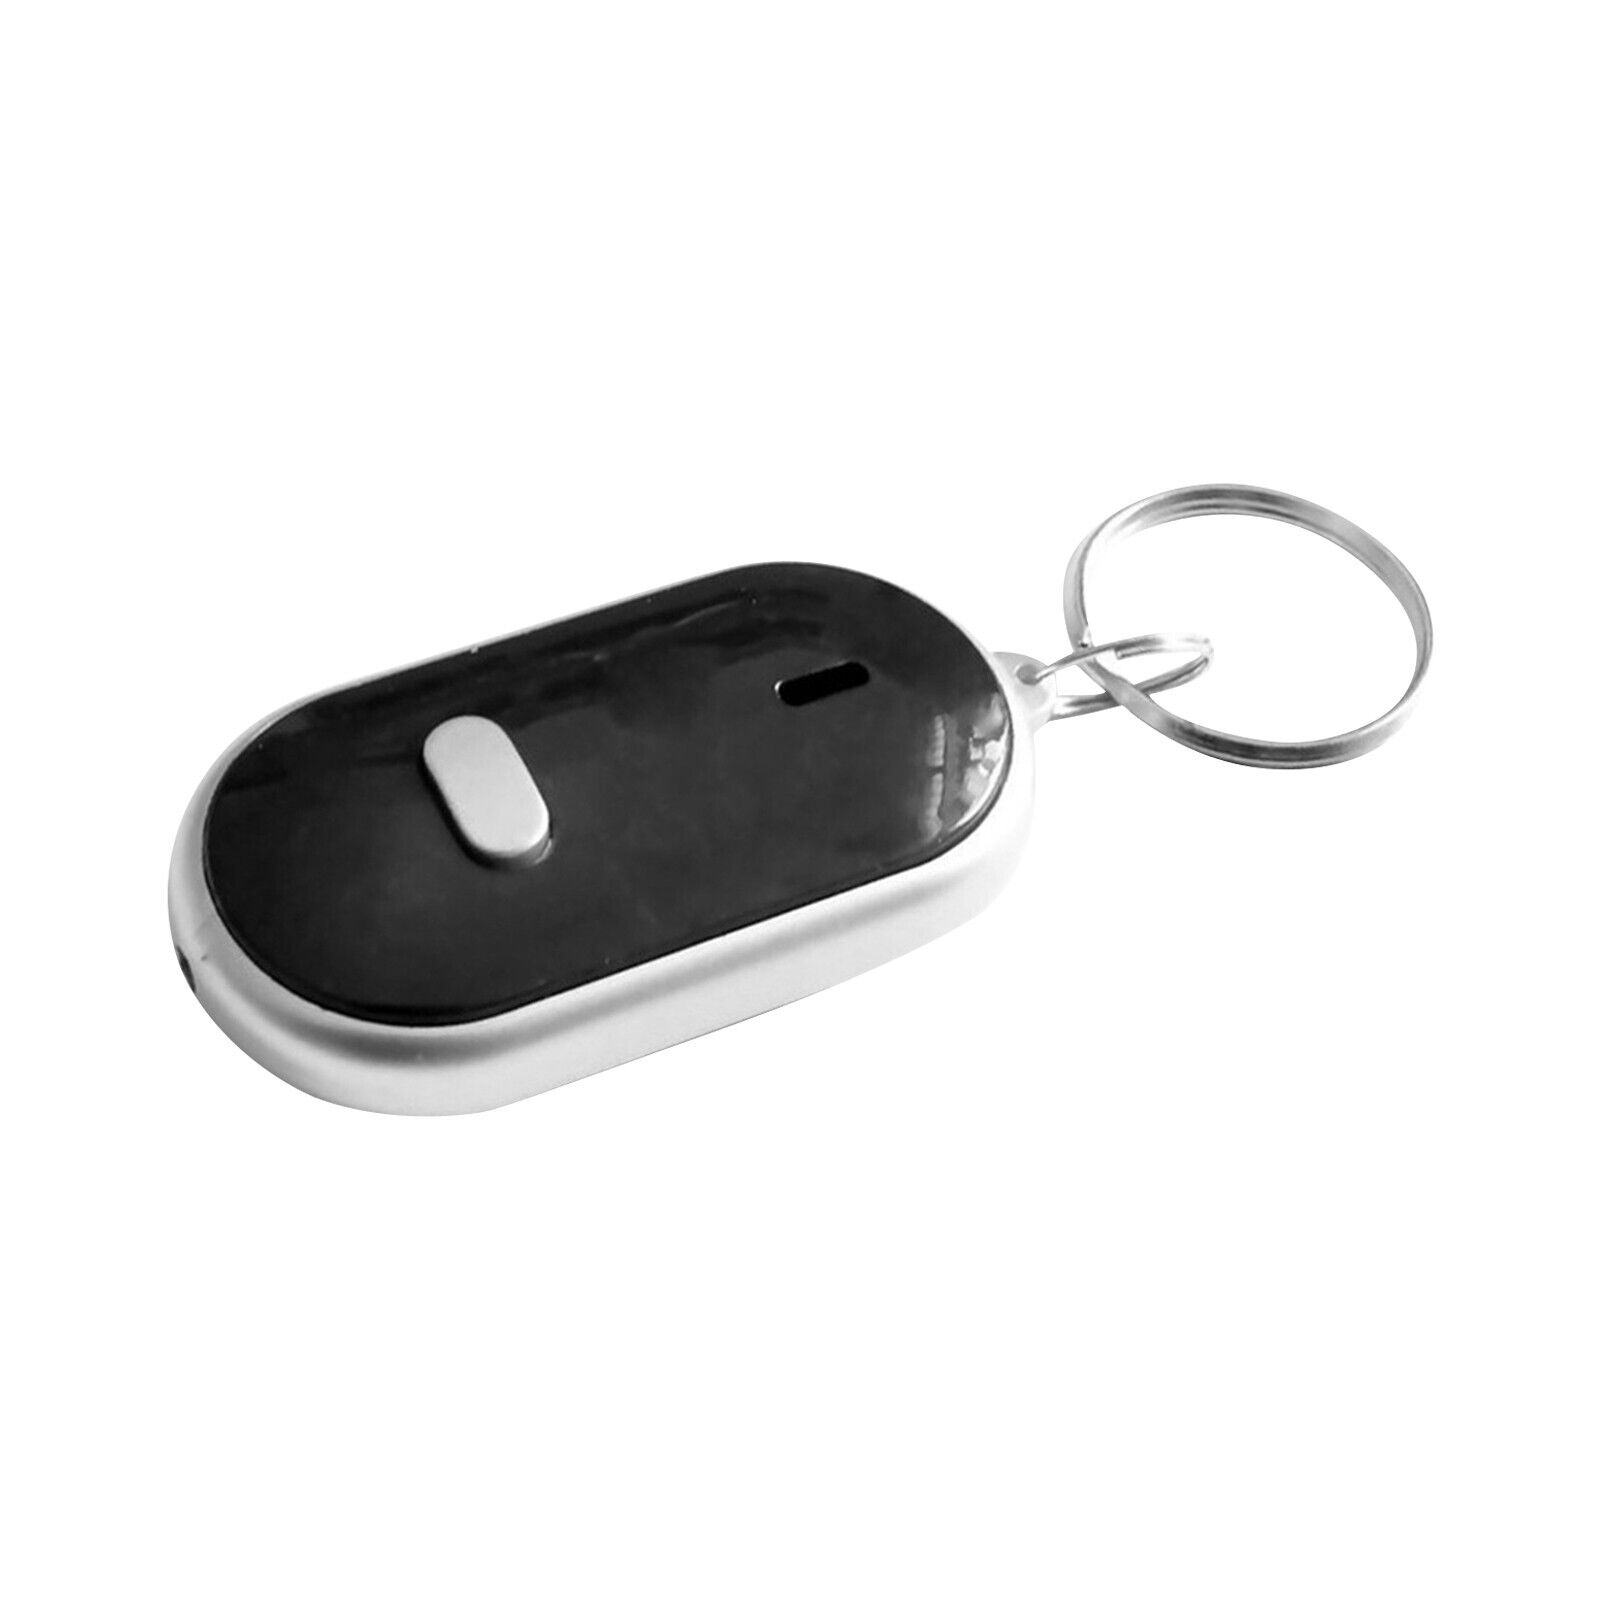 Portable LED Lost Key Finder Locator Keychain Whistle Sound Control Keyring